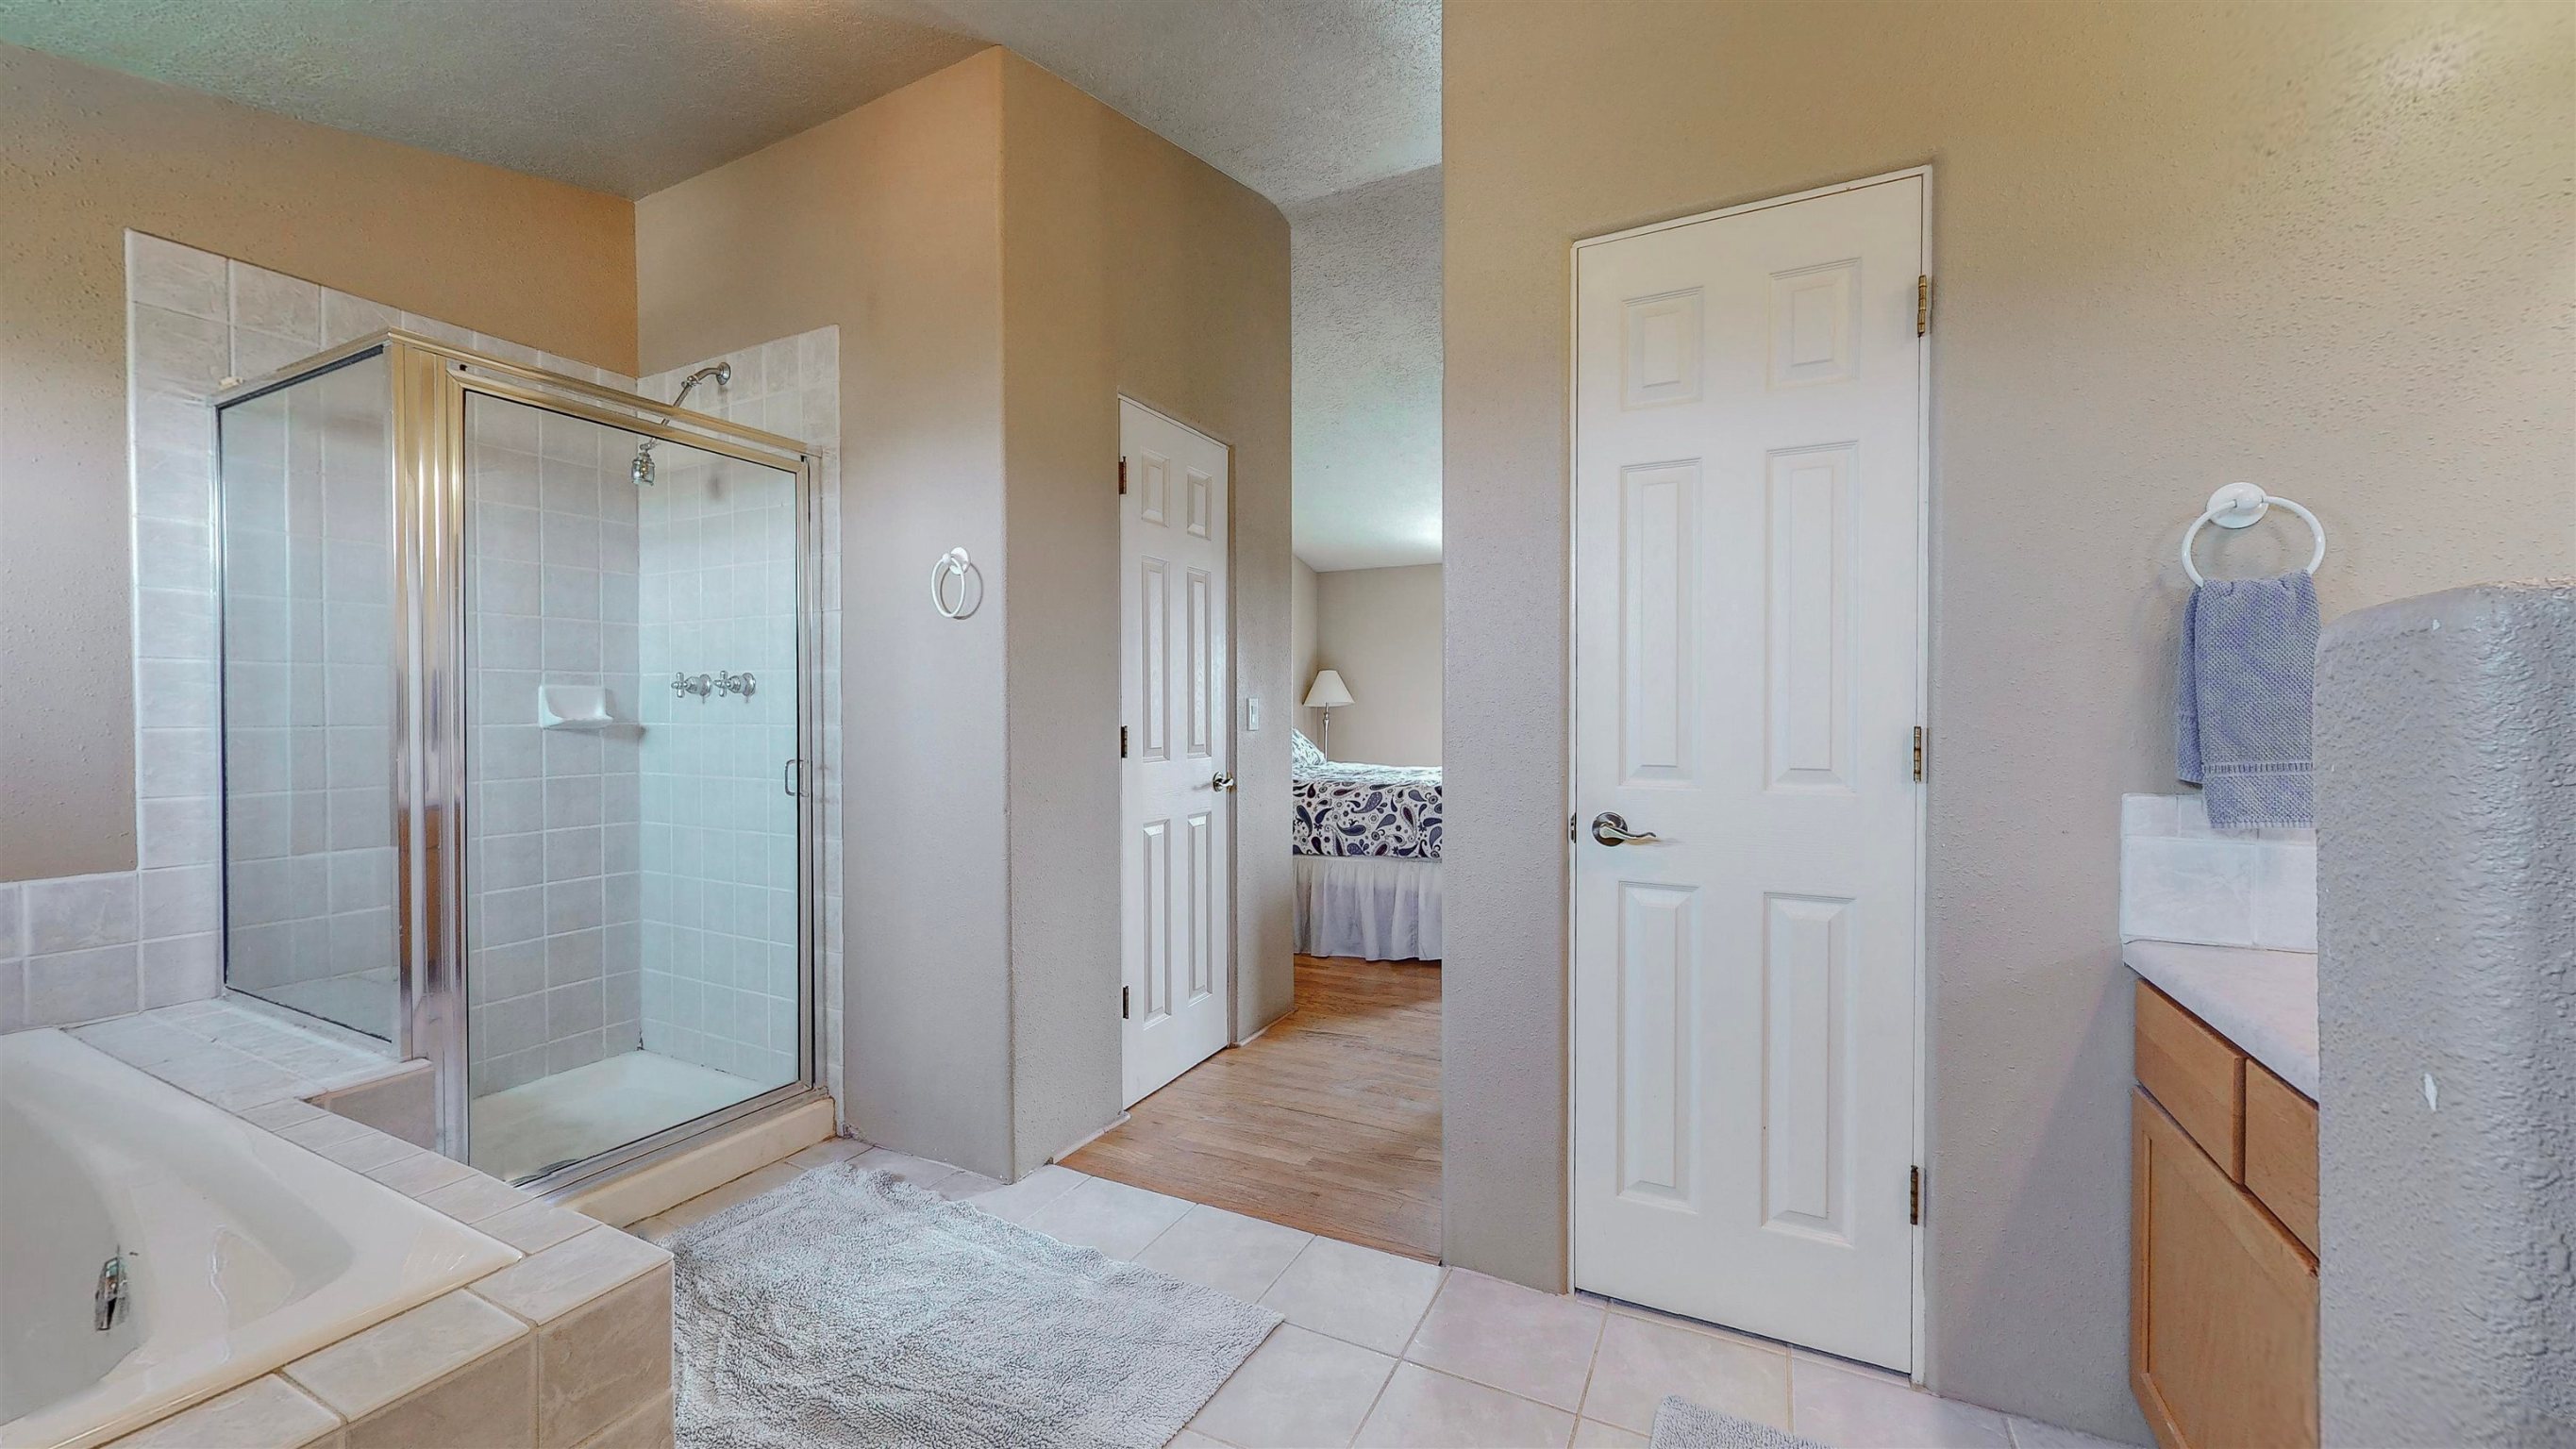 40 Taft, Tijeras, New Mexico 87047, 4 Bedrooms Bedrooms, ,3 BathroomsBathrooms,Residential,For Sale,40 Taft,202103851